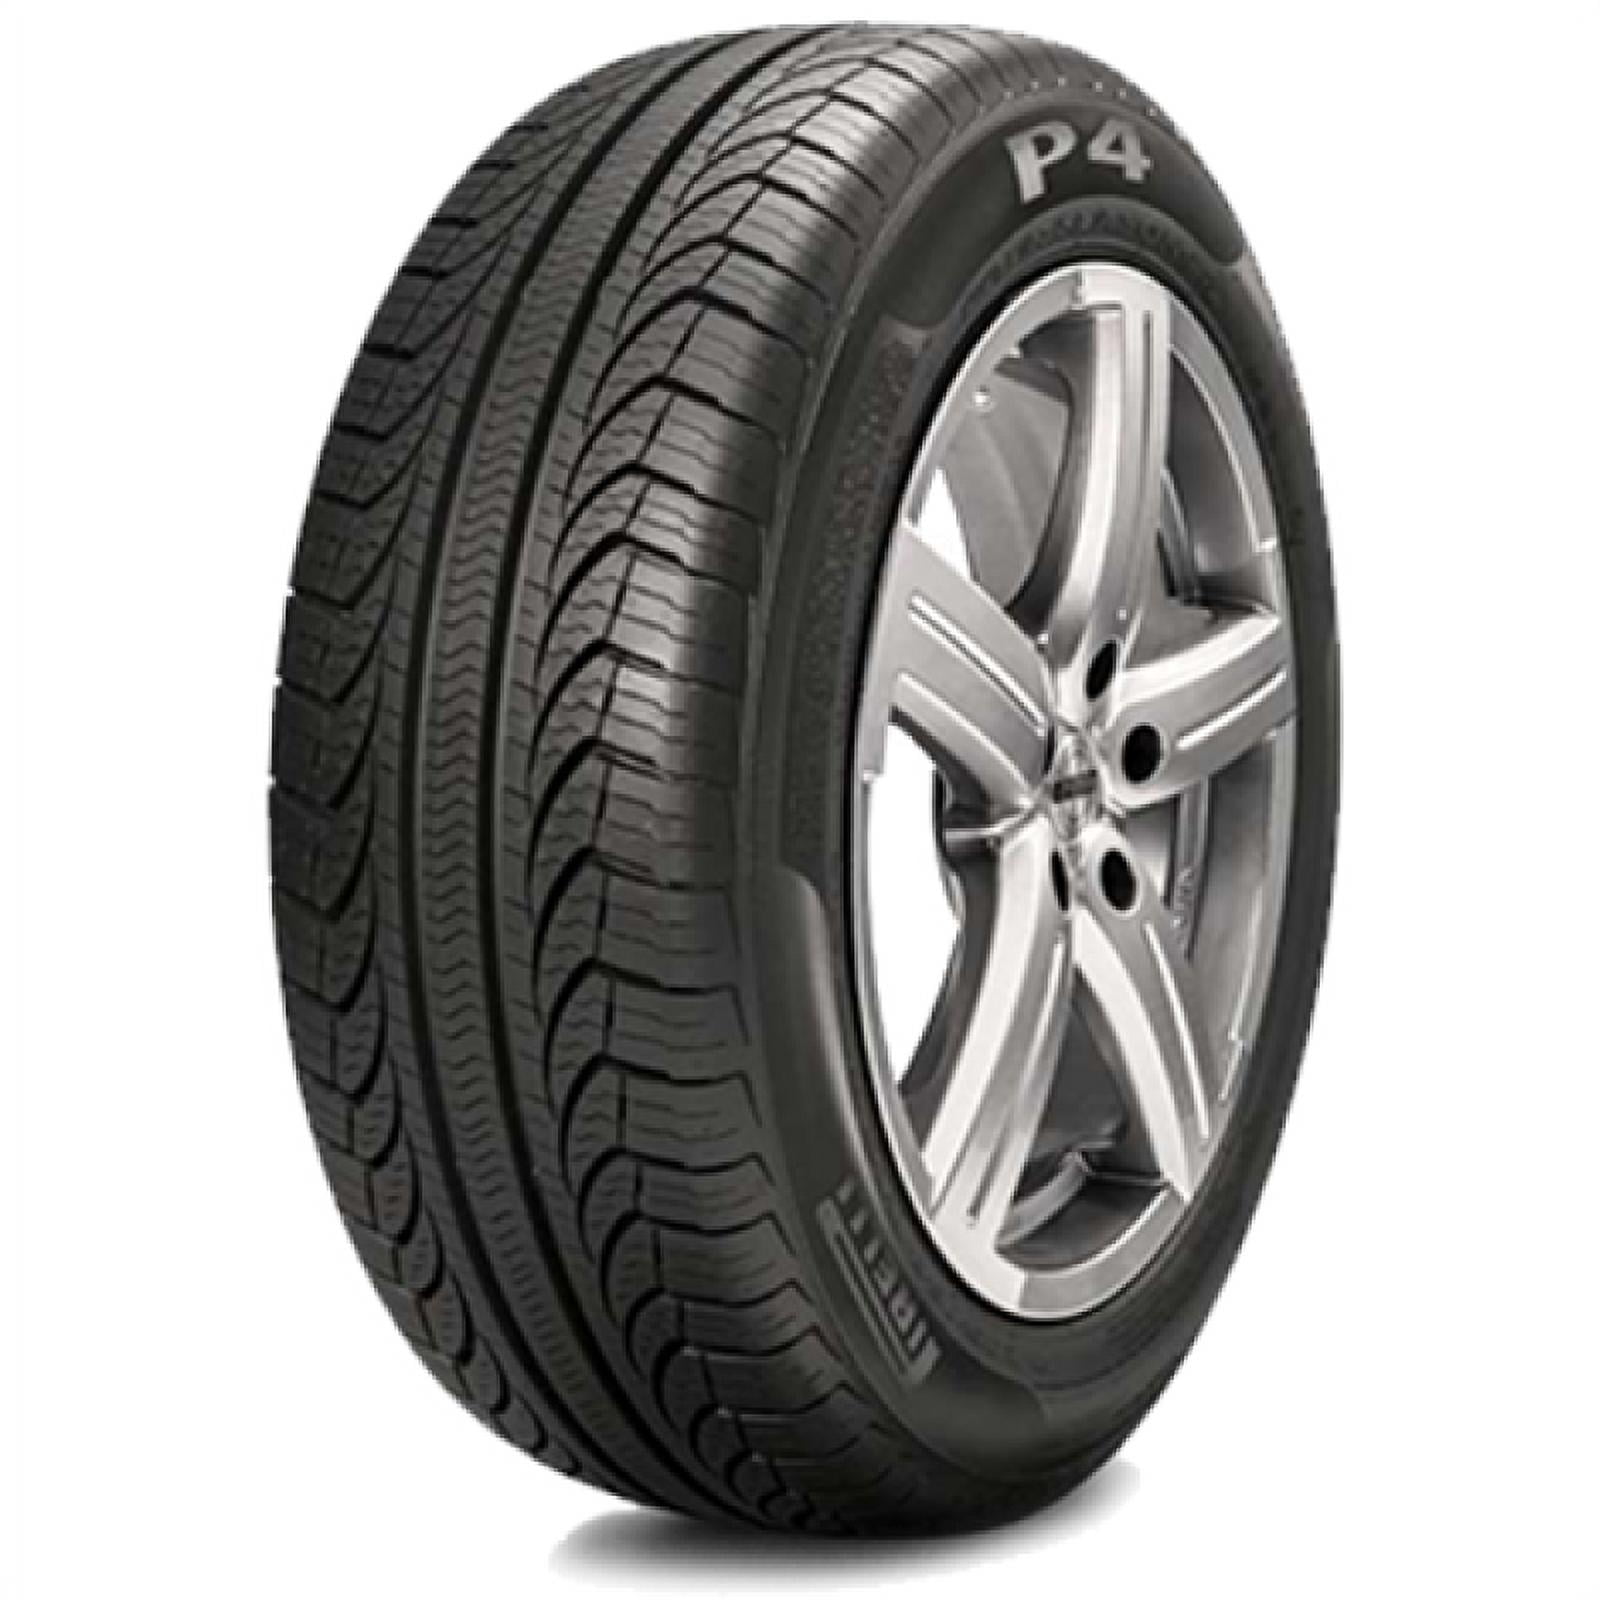 Tire Pirelli P4 Four Seasons Plus 215/60R16 95T AS All Season A/S